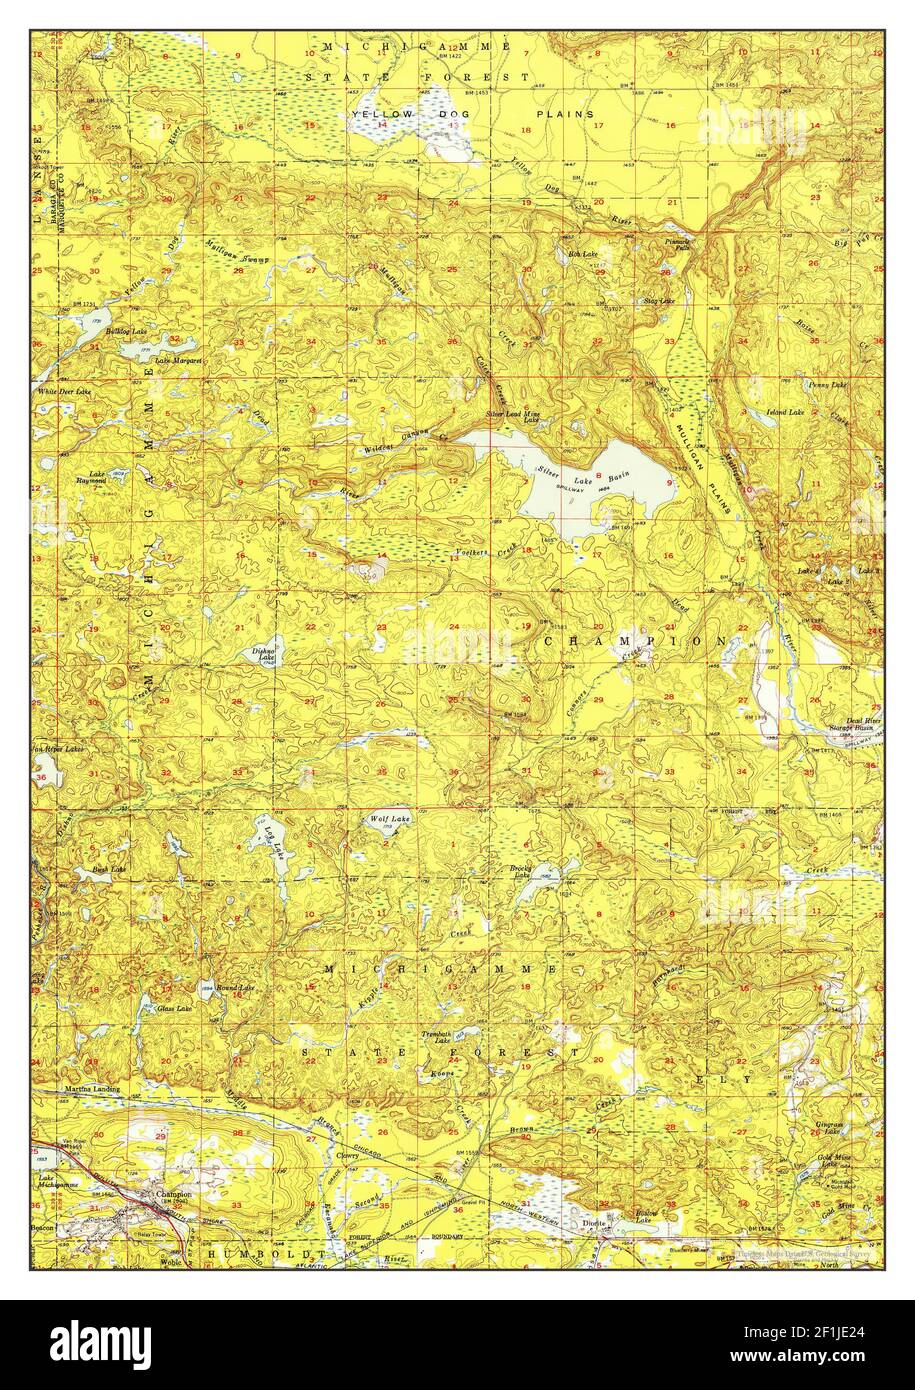 Champion, Michigan, map 1955, 1:62500, United States of America by Timeless  Maps, data U.S. Geological Survey Stock Photo - Alamy